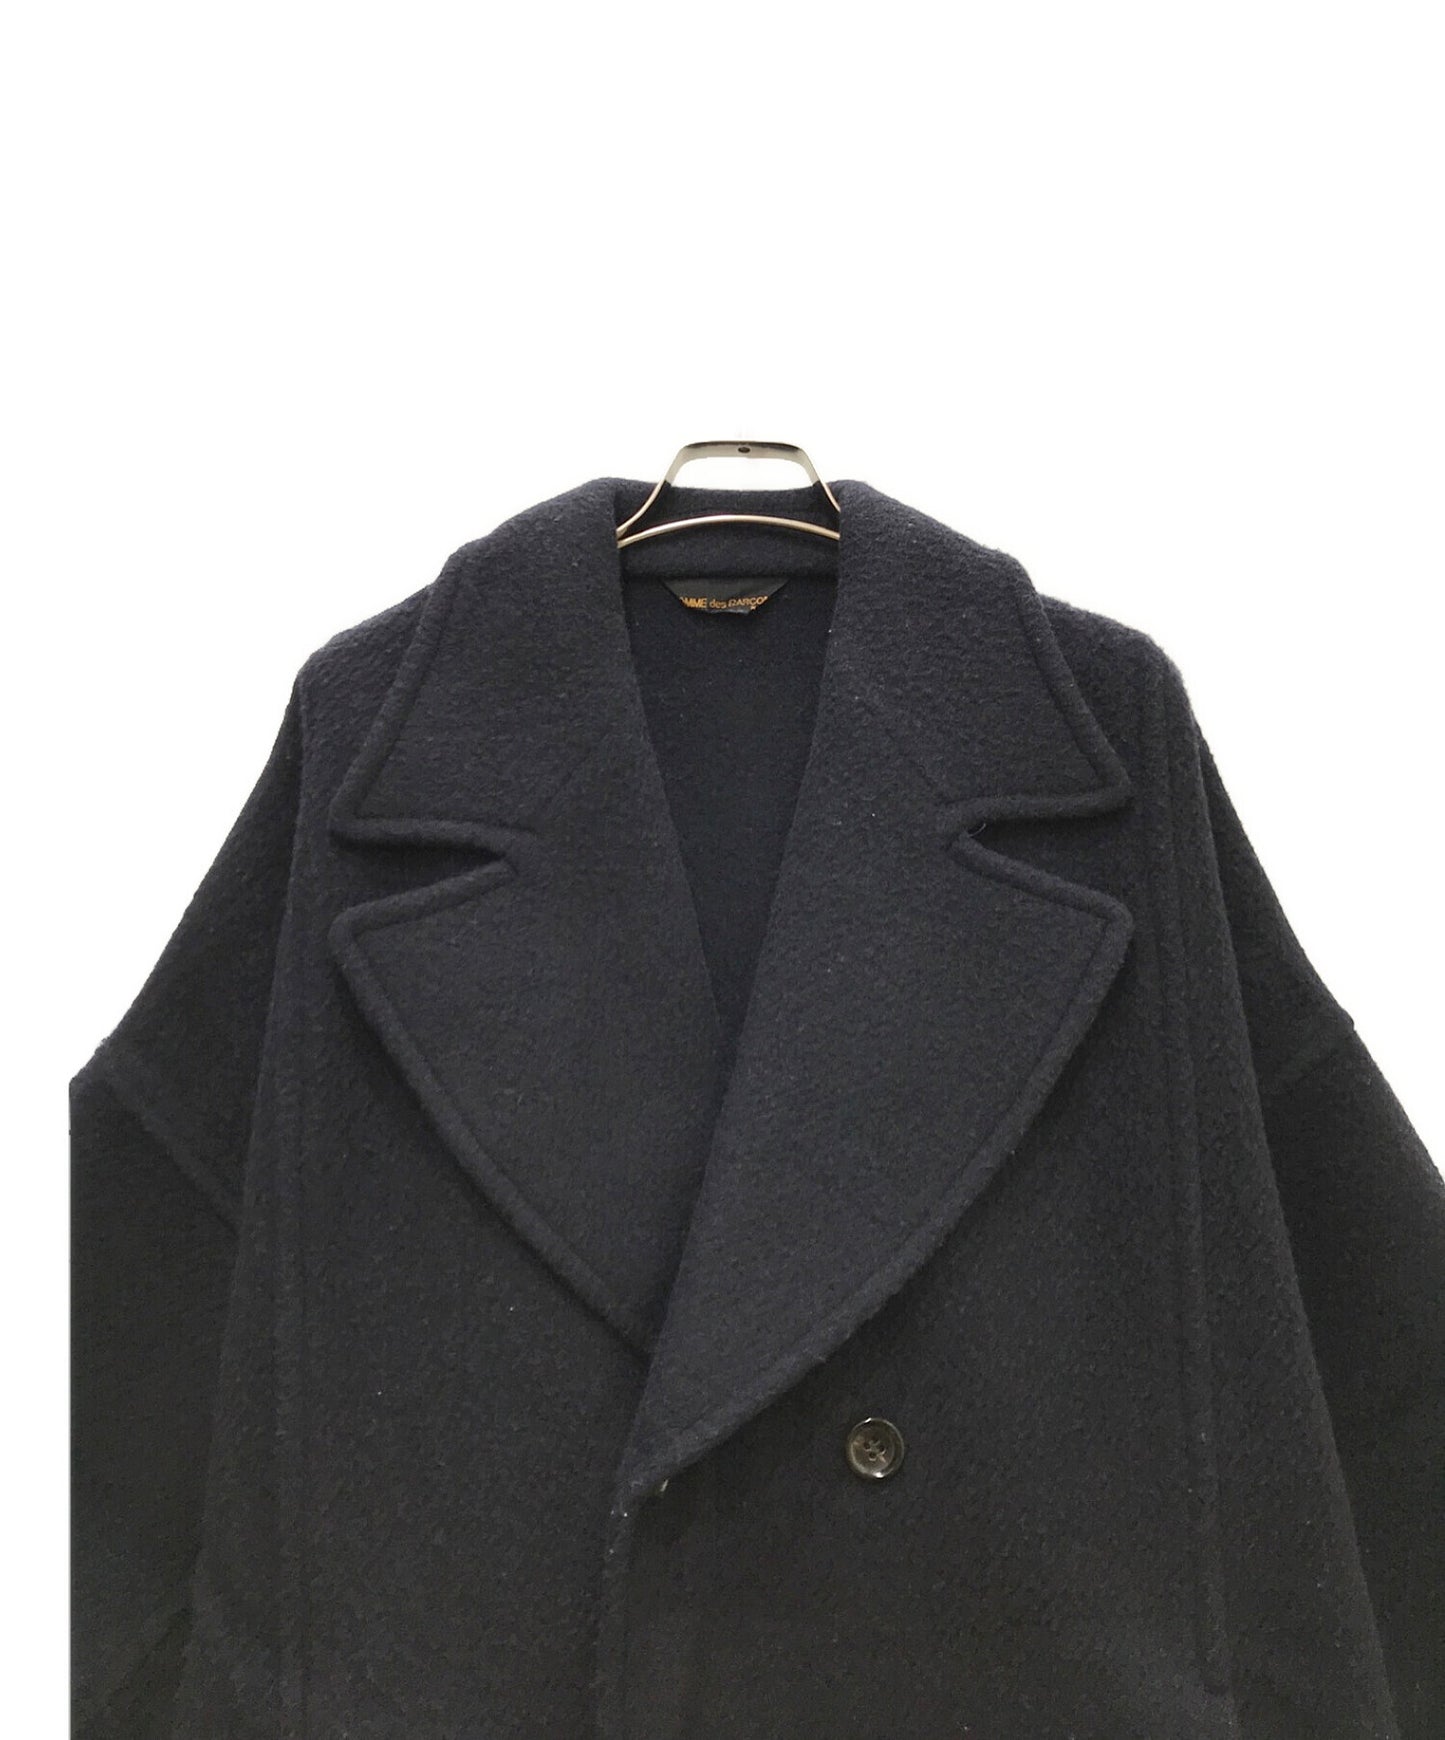 Comme des Garcons [Old] Wool Double Coat GC-090050 80's Coat GC-090050